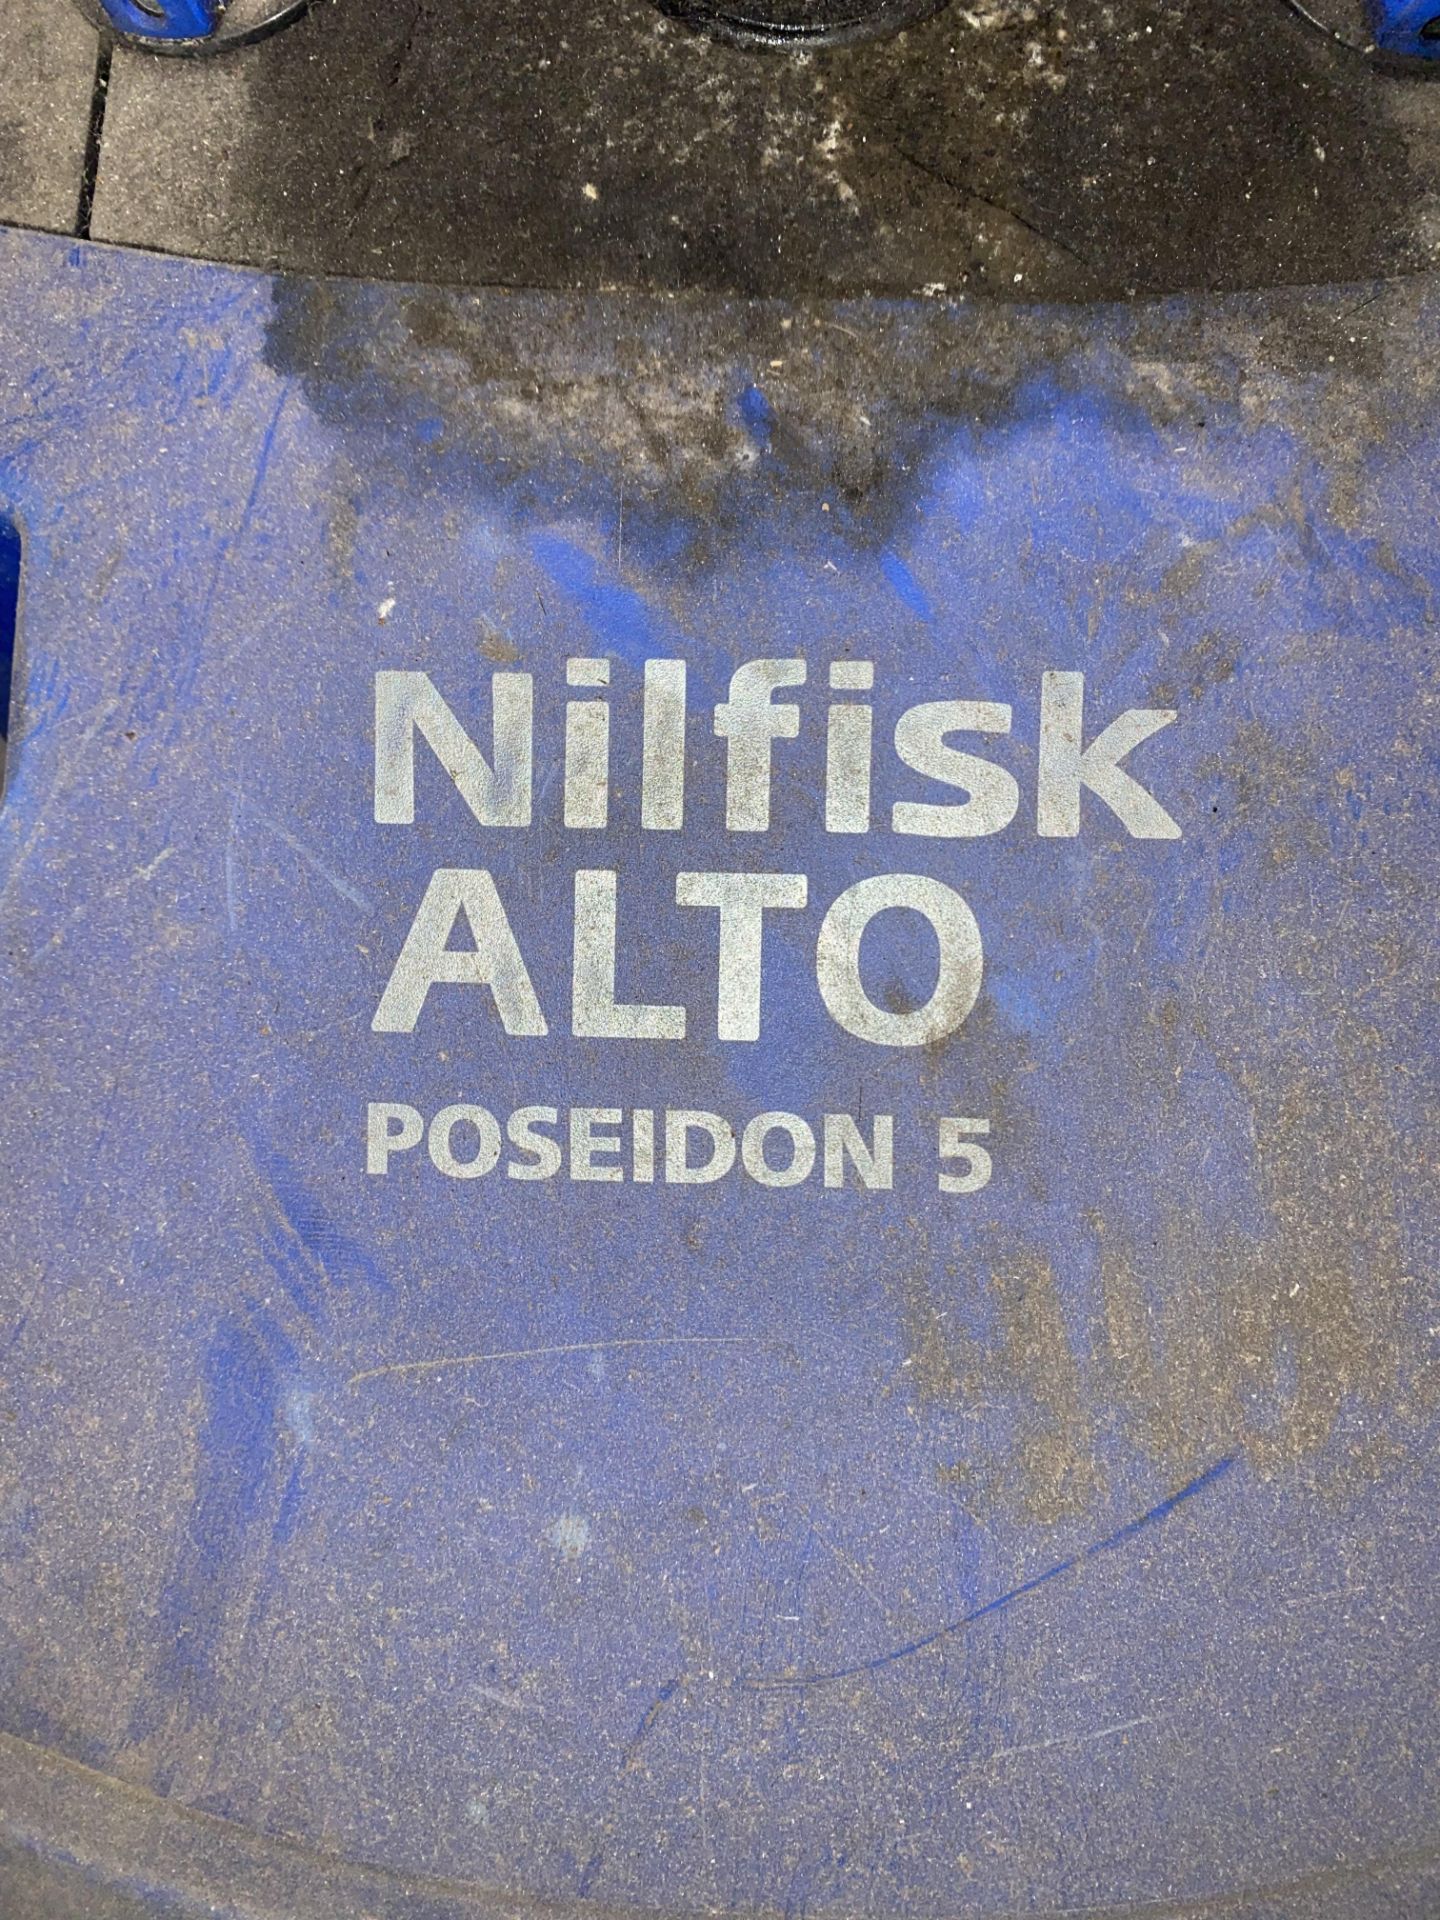 Nilfisk Alto Poseidon 5-32PA pressure washer, Serial no. 3520102000029-15-20, 240v with lance - Image 2 of 5